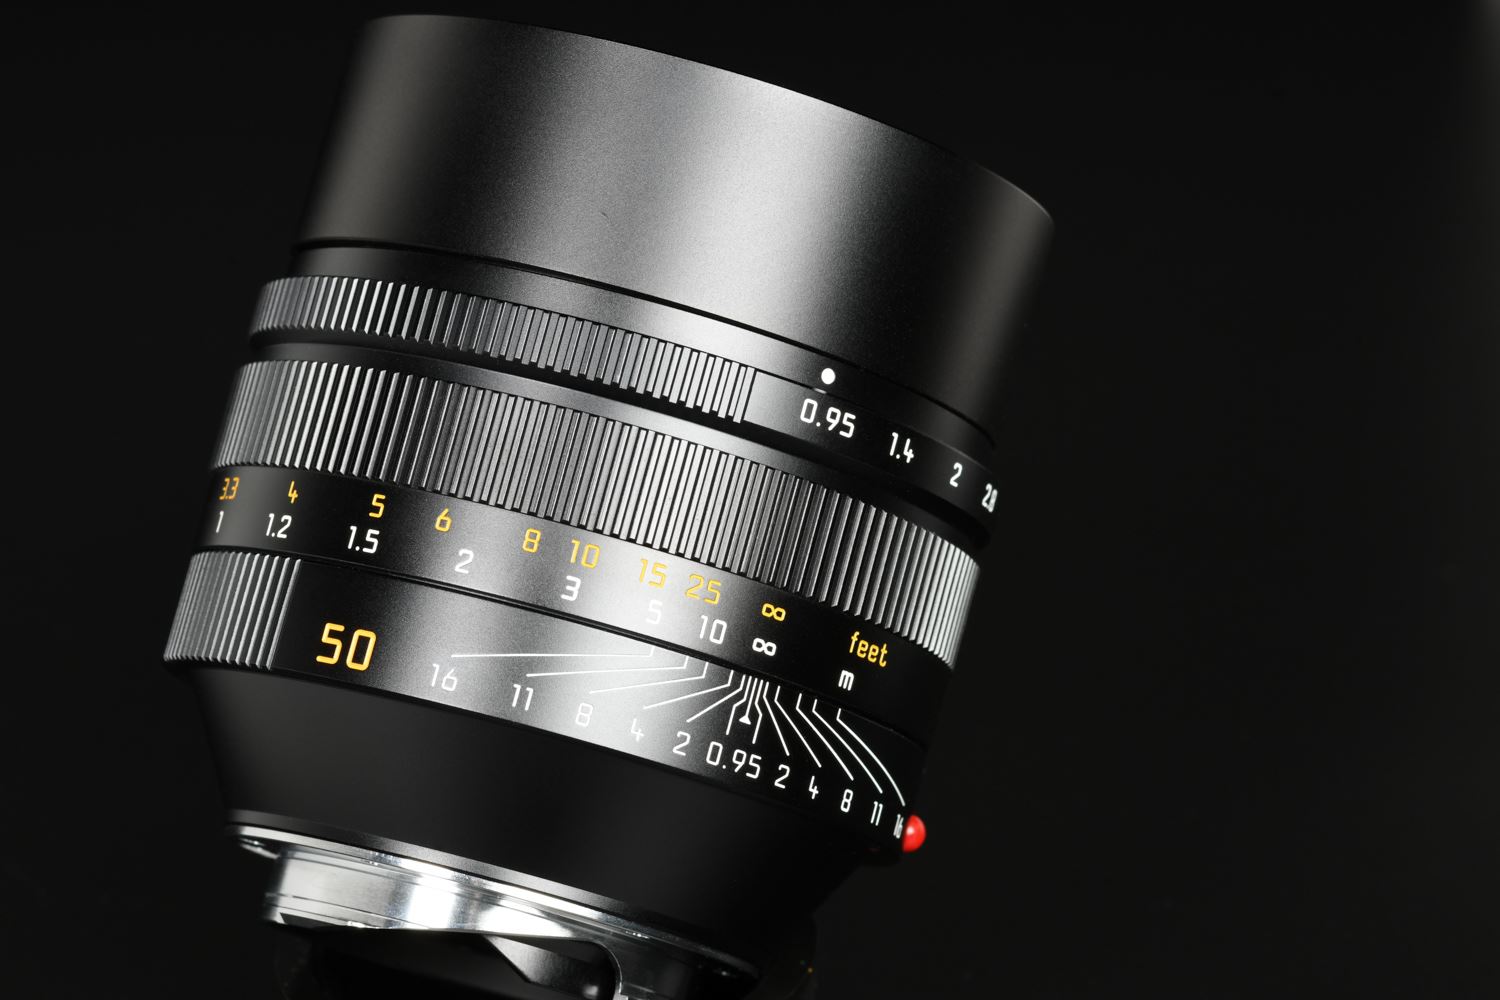 Picture of Leica Noctilux-M 50mm f/0.95 ASPH Black